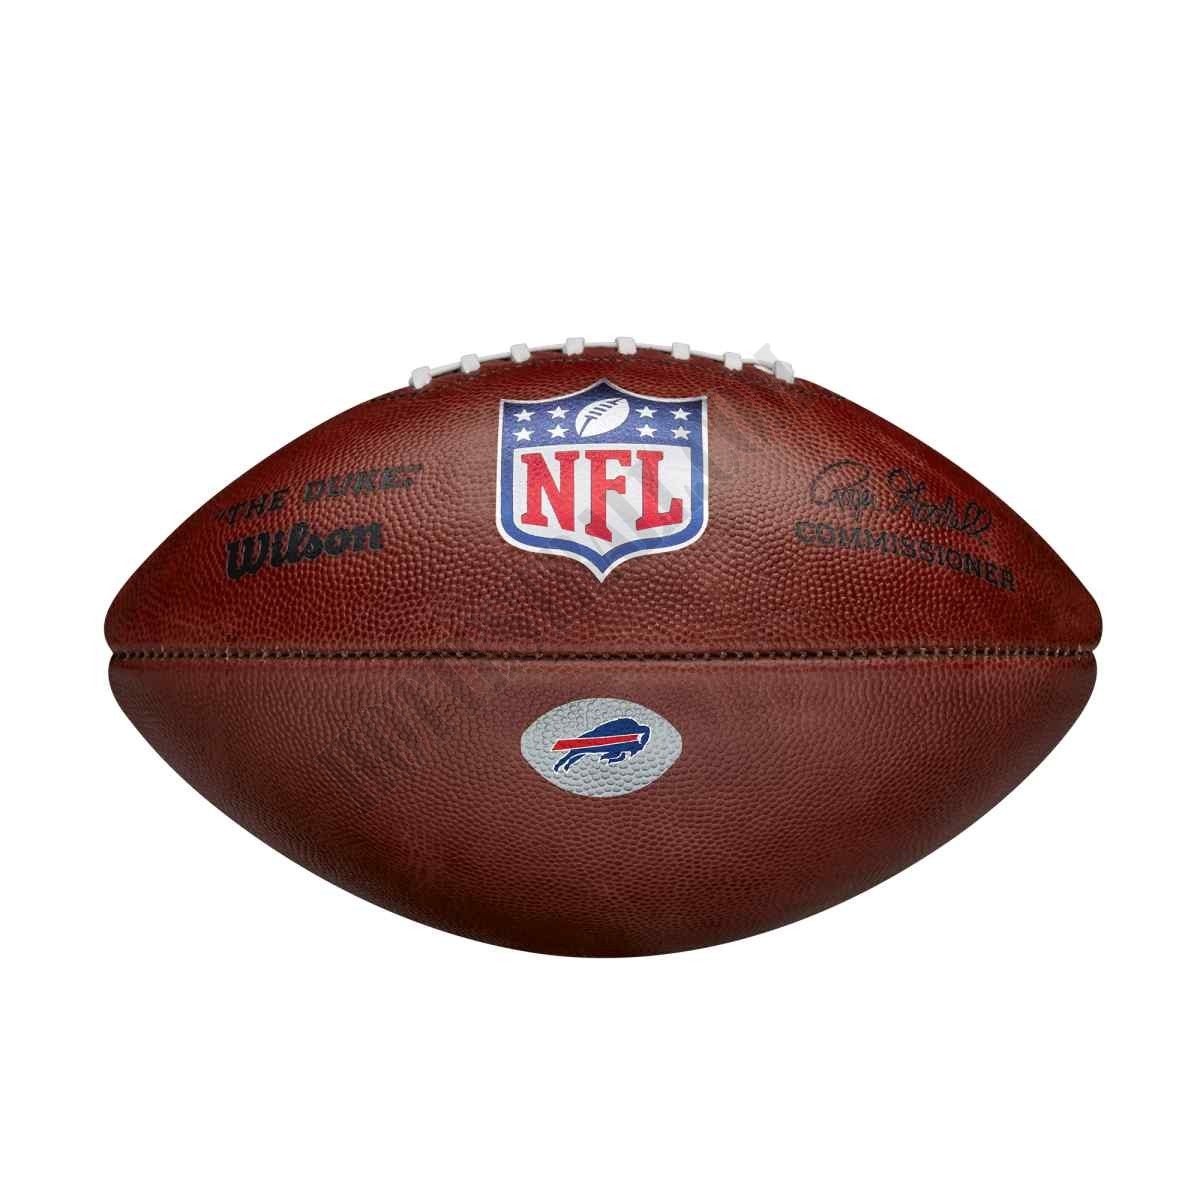 The Duke Decal NFL Football - Buffalo Bills ● Wilson Promotions - The Duke Decal NFL Football - Buffalo Bills ● Wilson Promotions